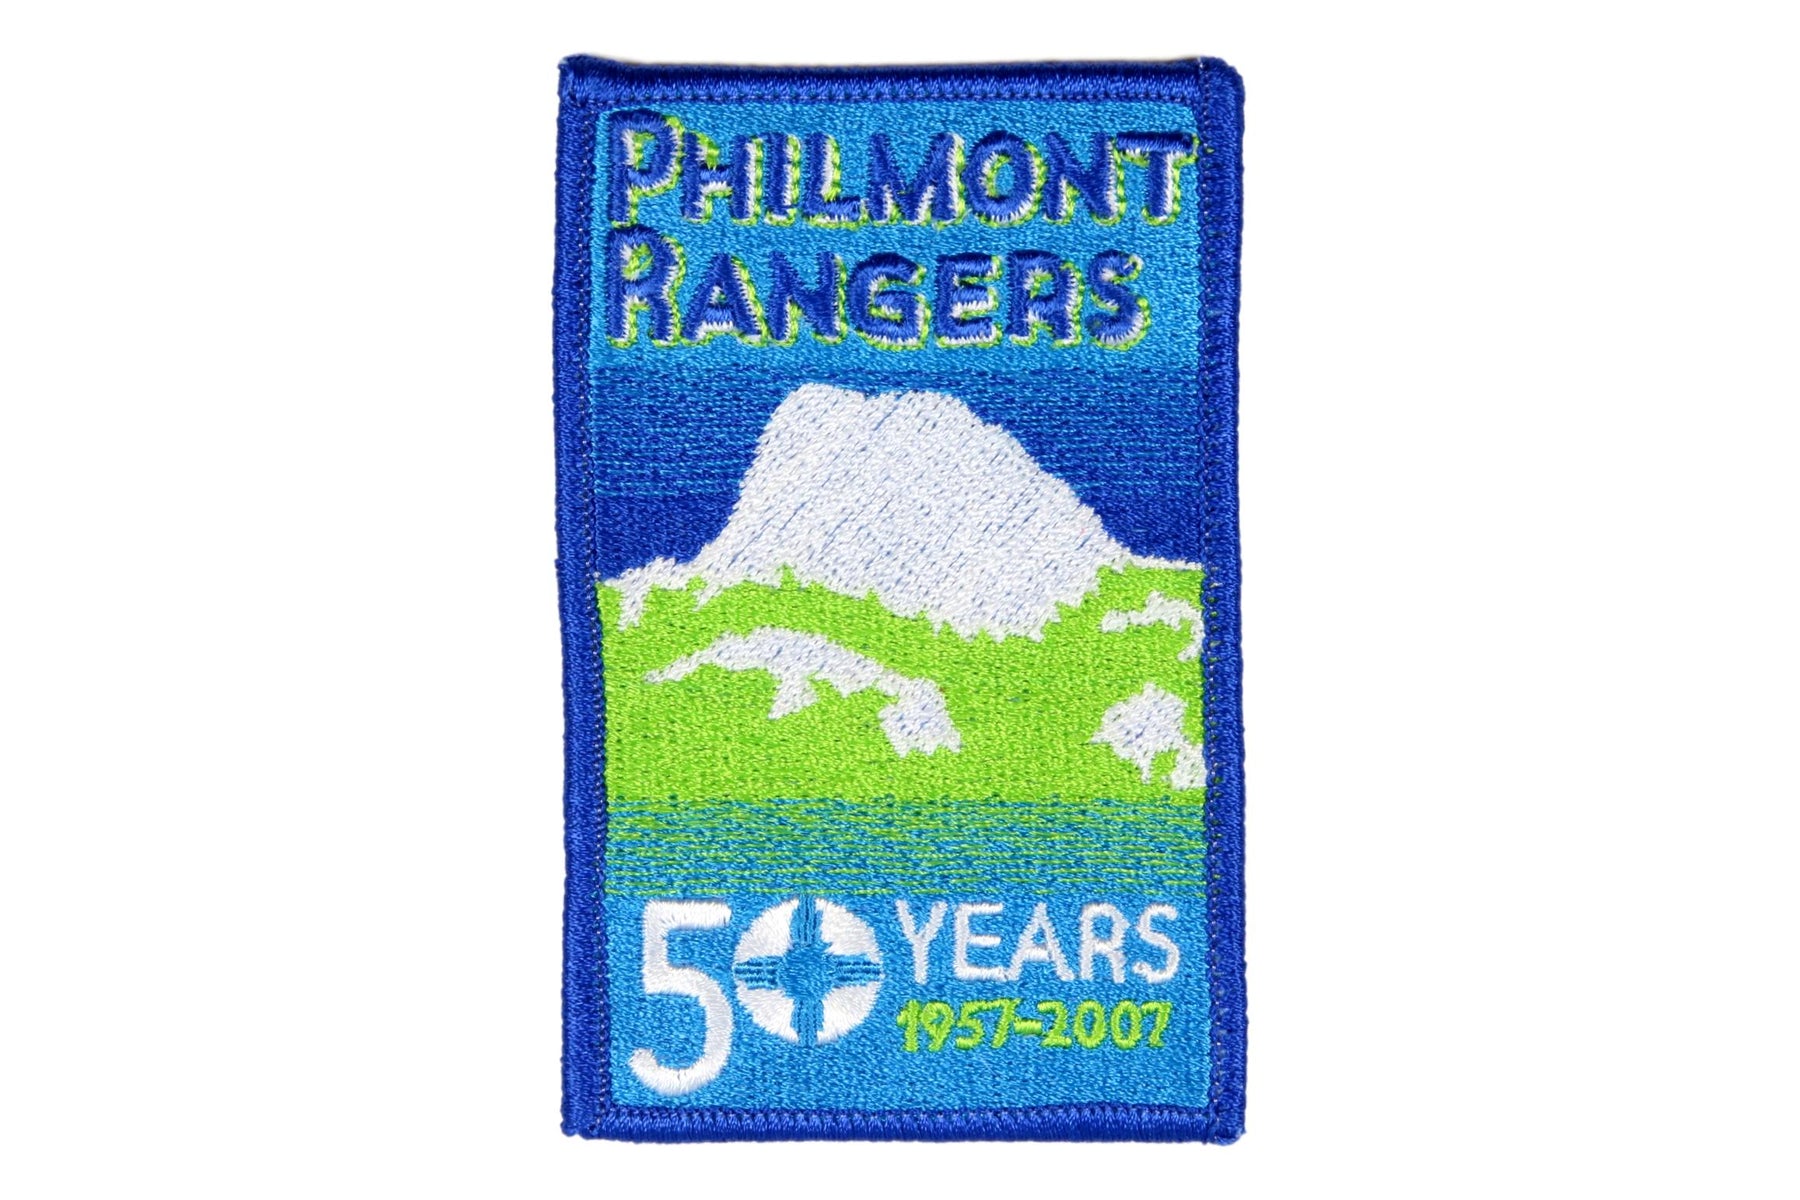 2007 Philmont Rangers Patch